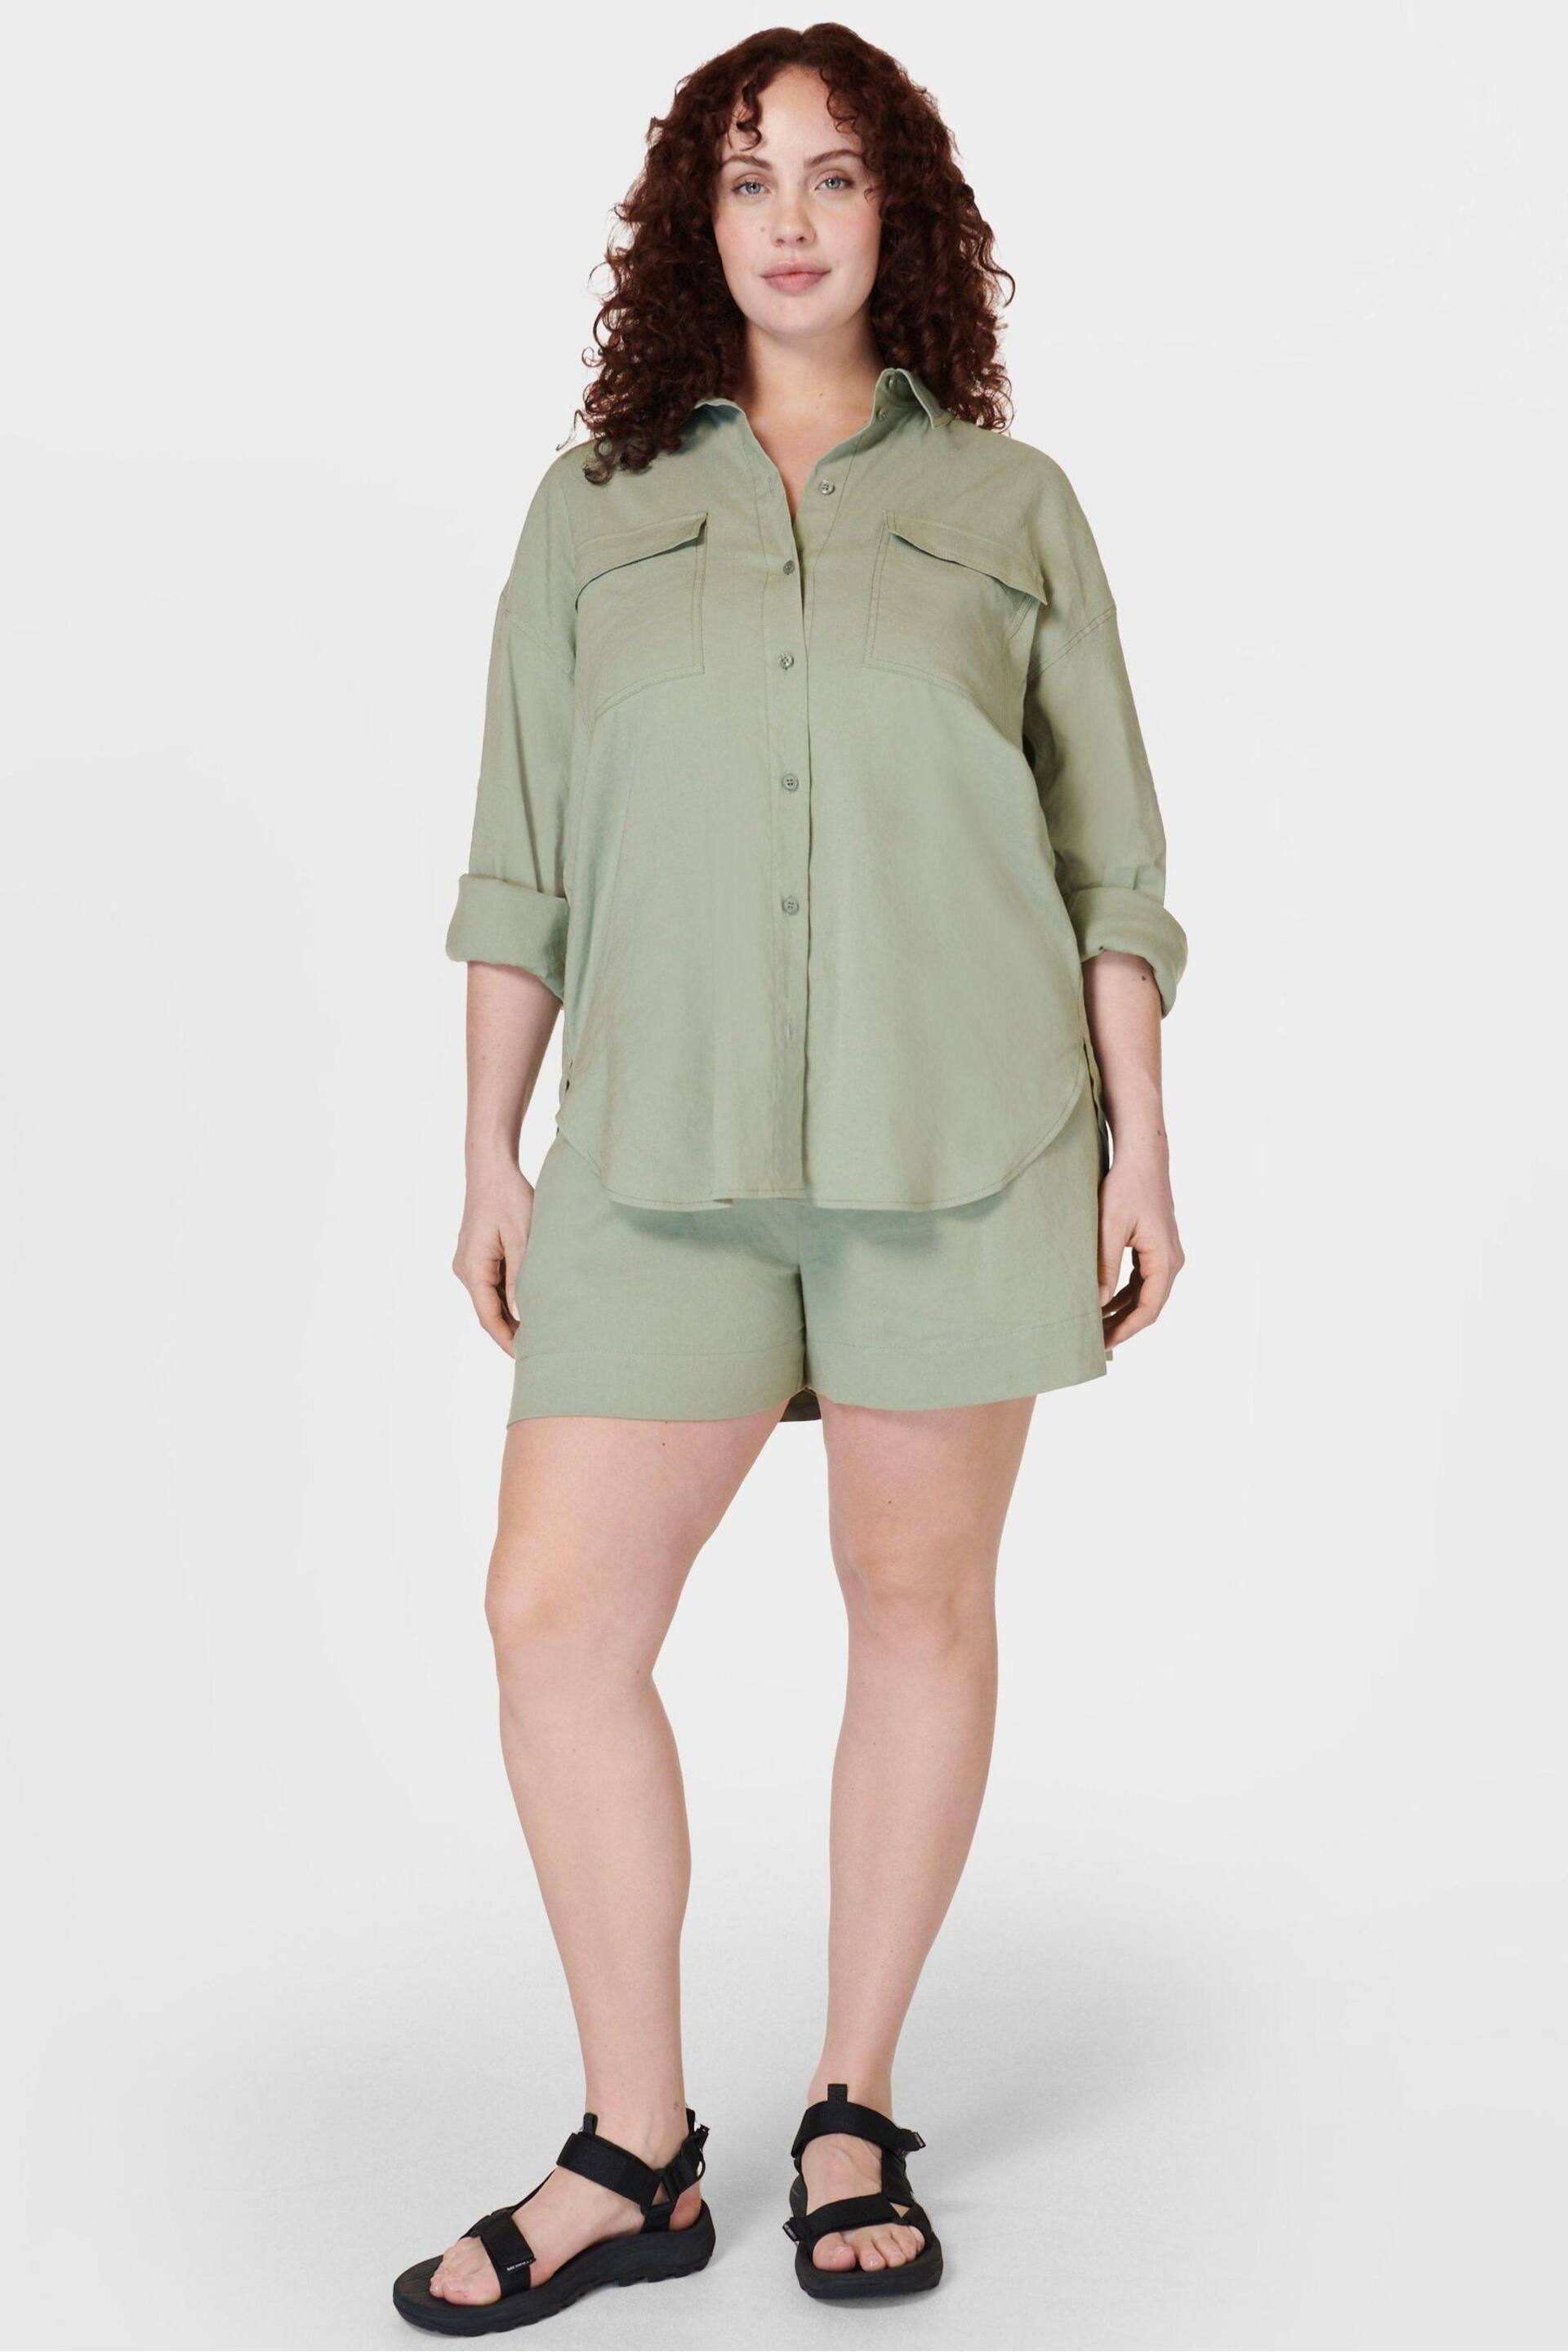 Sweaty Betty Savannah Green Chroem Summer Stretch Linen Utility Shirt - Image 4 of 8